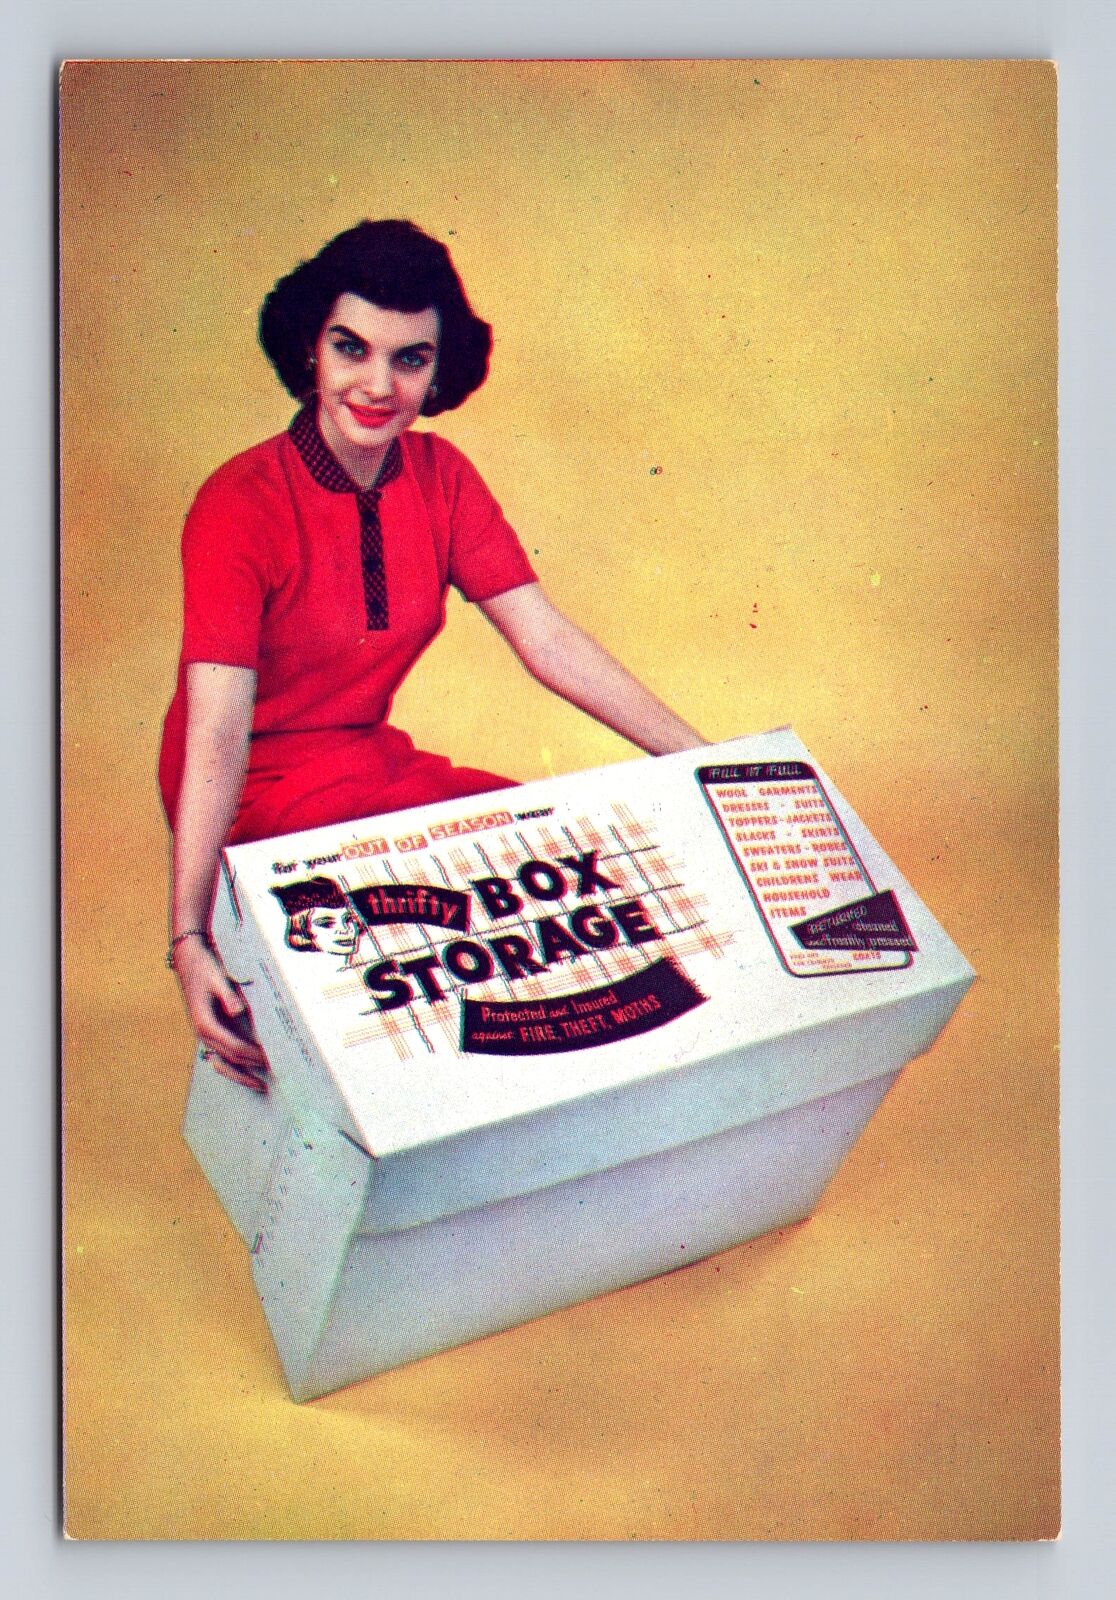 Kingston PA-Pennsylvania, Master Garment Cleaners Advertising Vintage Postcard